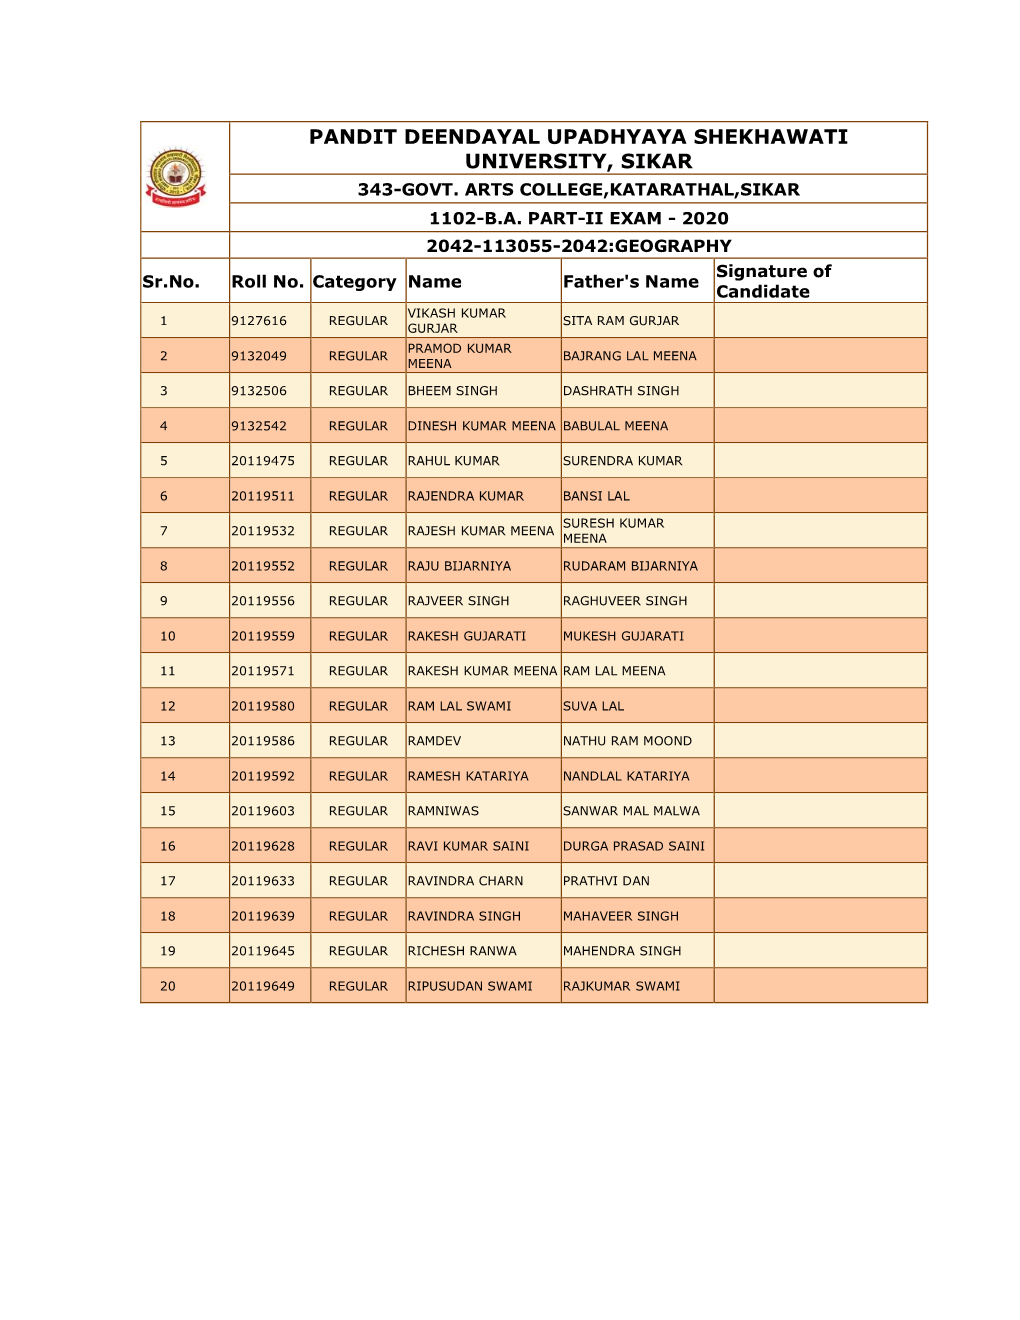 Pandit Deendayal Upadhyaya Shekhawati University, Sikar 343-Govt